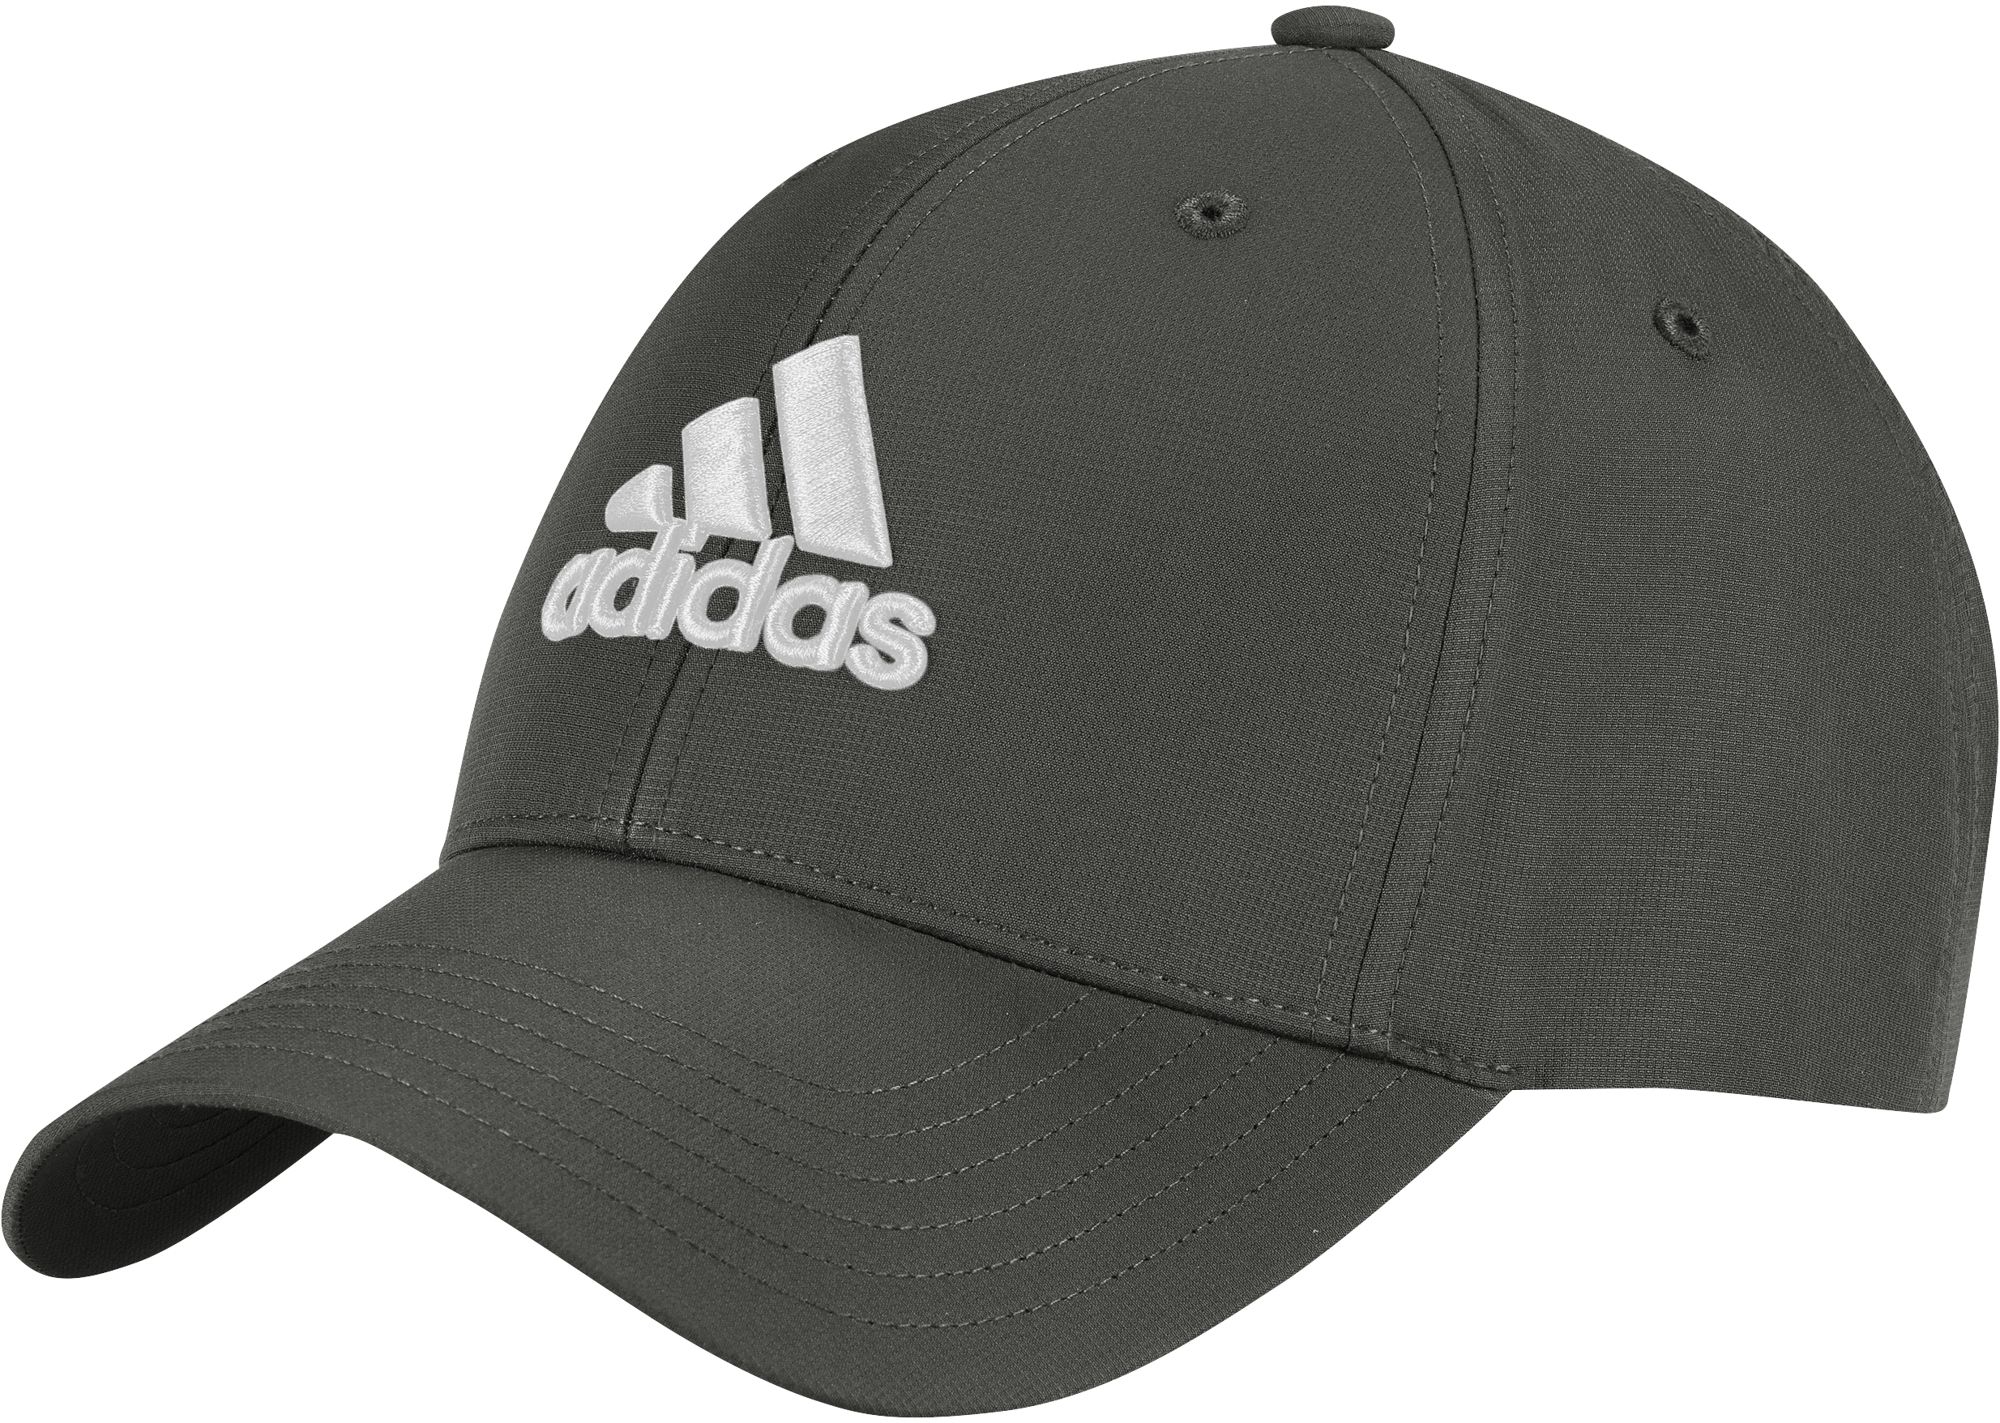 adidas performance golf hat